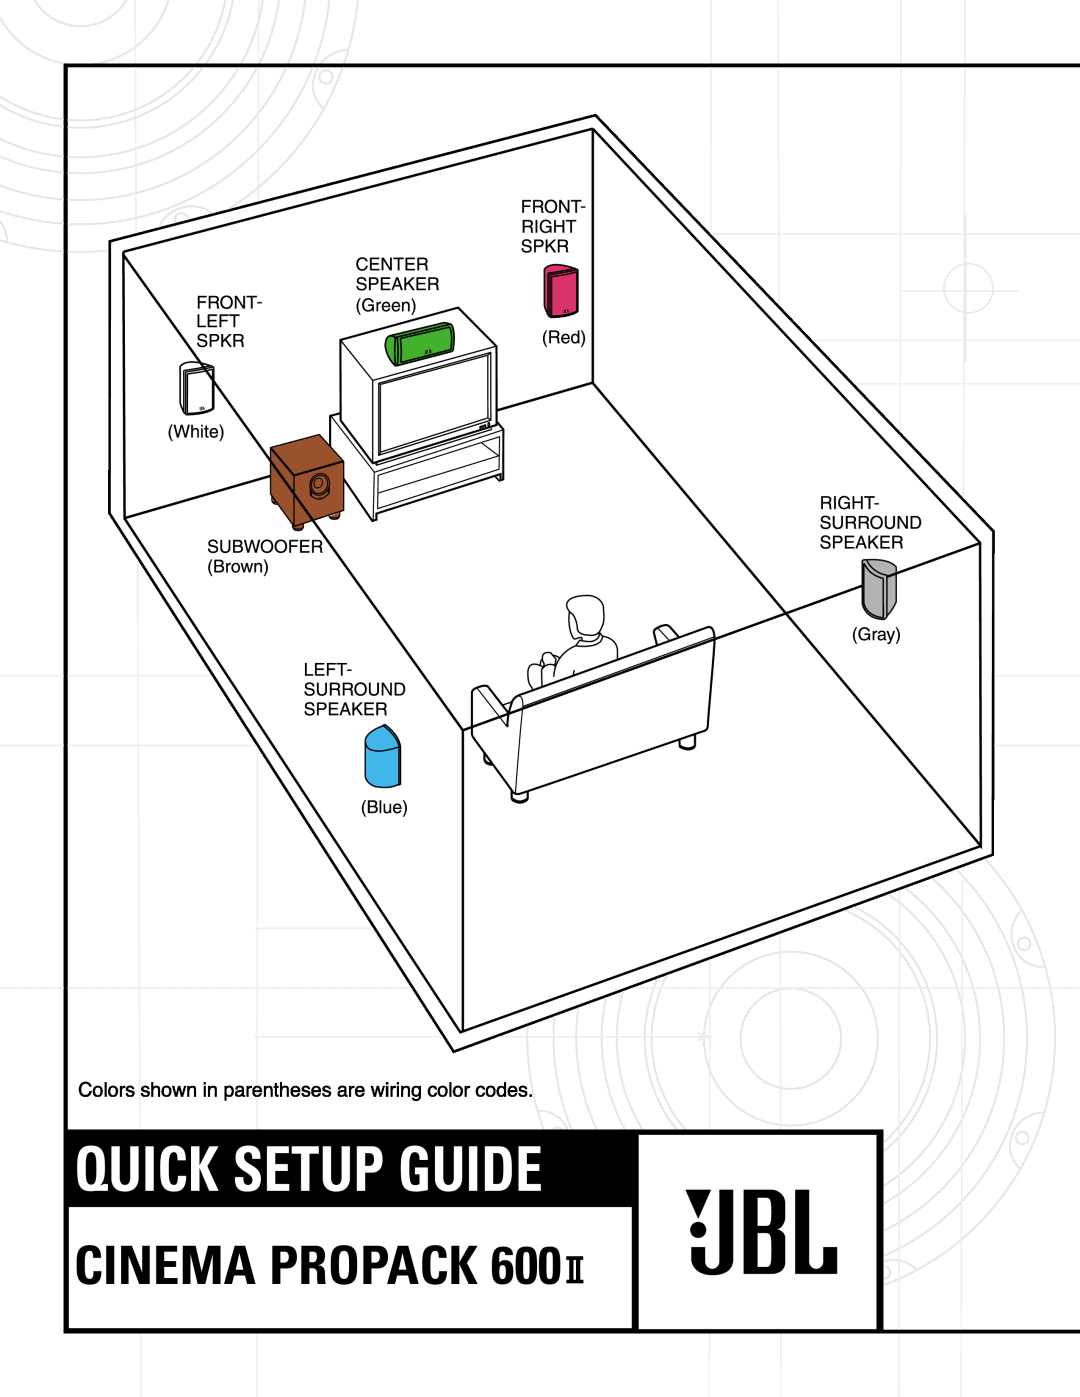 JBL 600II setup guide Quick Setup Guide, Cinema Propack 